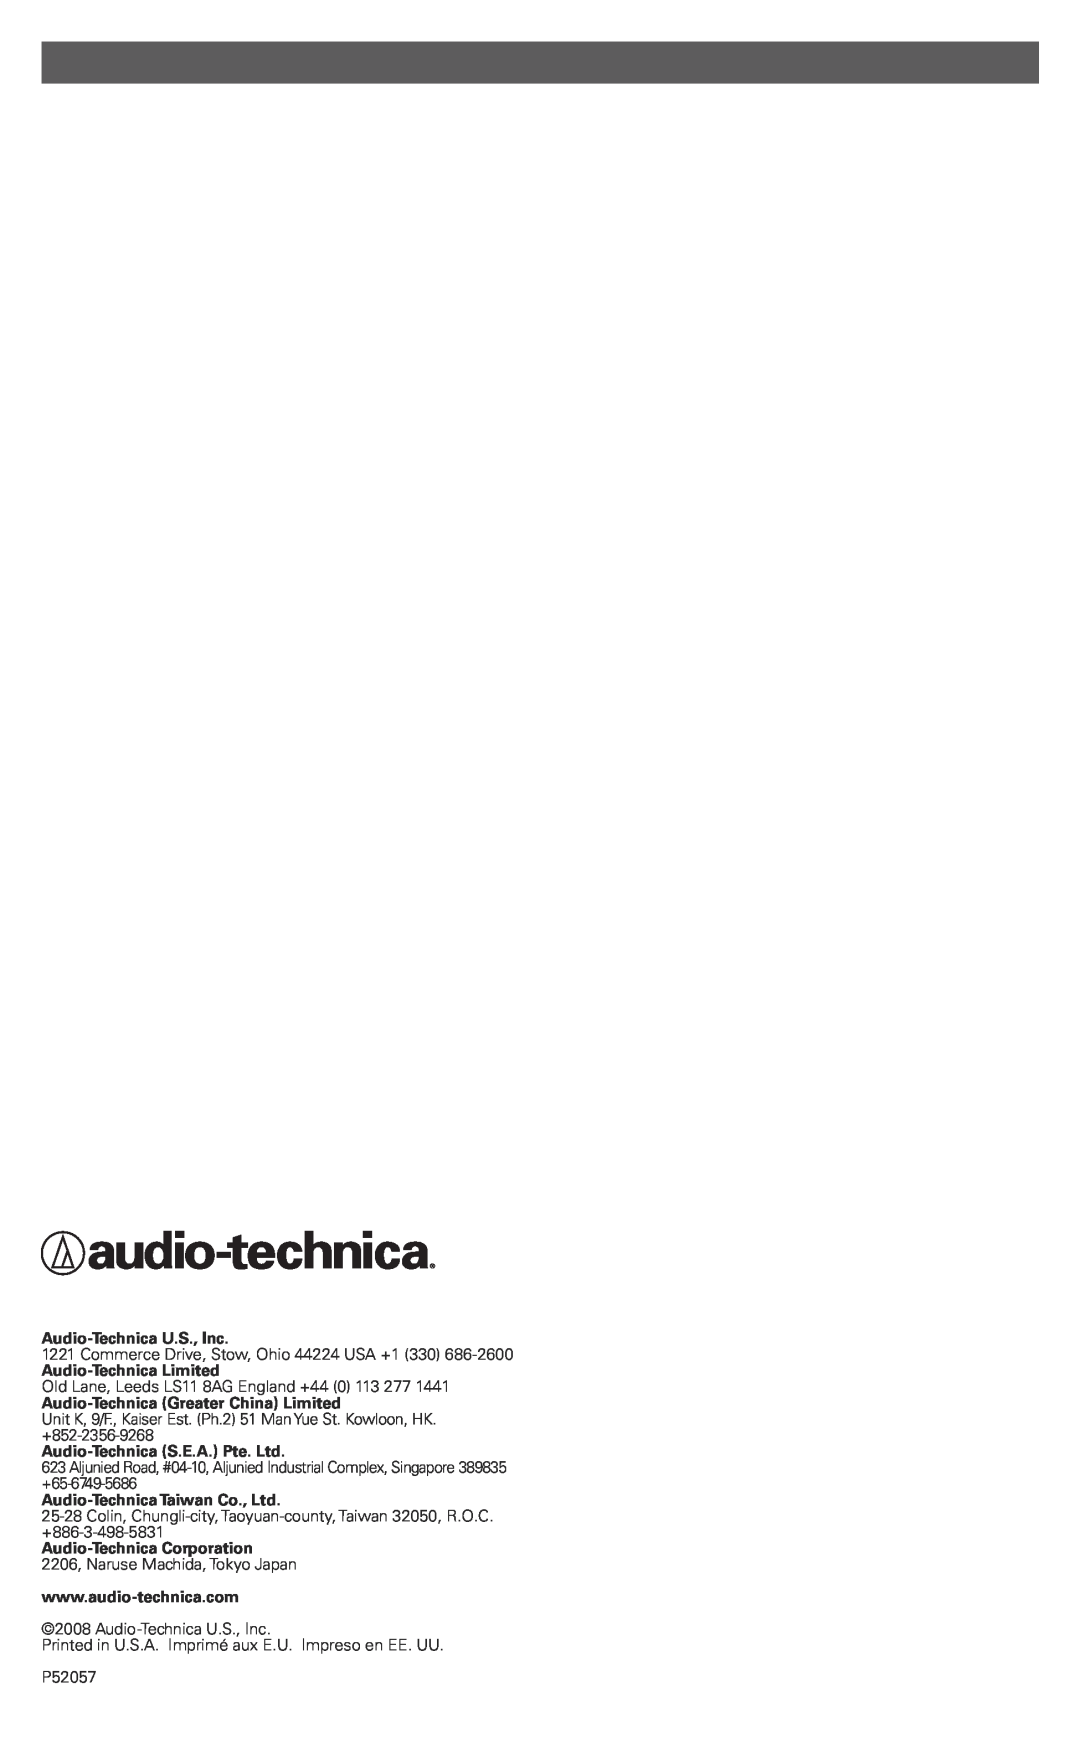 Audio-Technica EP3 manual Audio-TechnicaU.S., Inc 